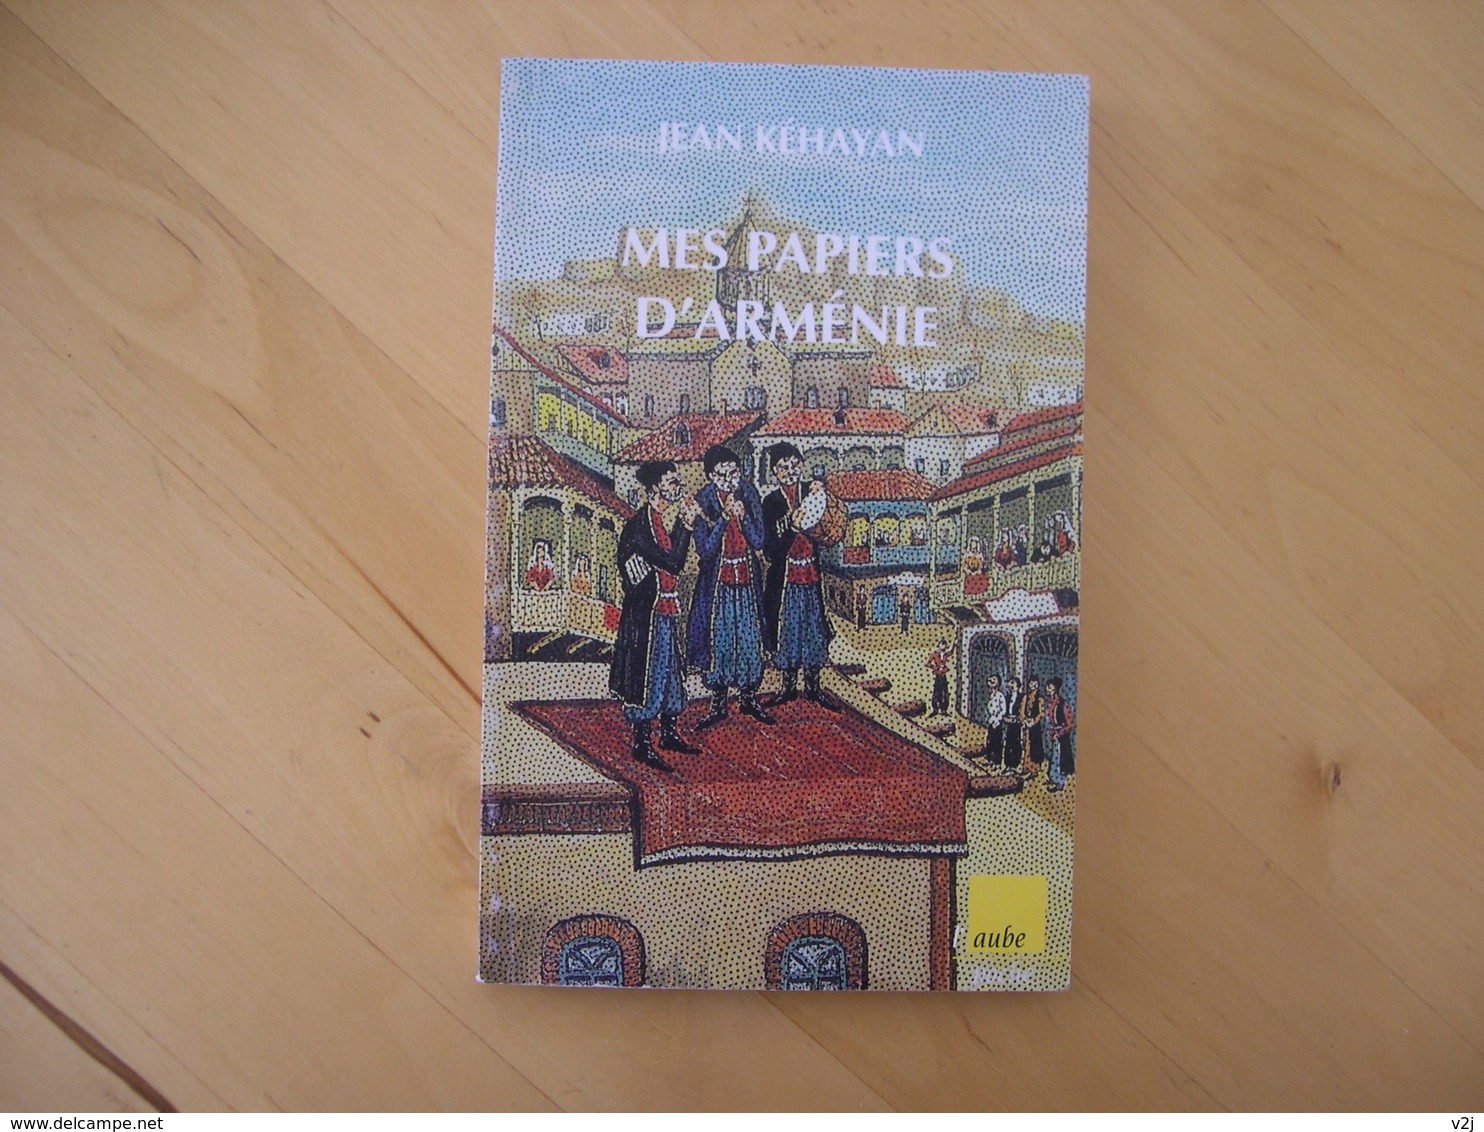 Mes Papiers D'arménie - Jean Kéhayan - Histoire